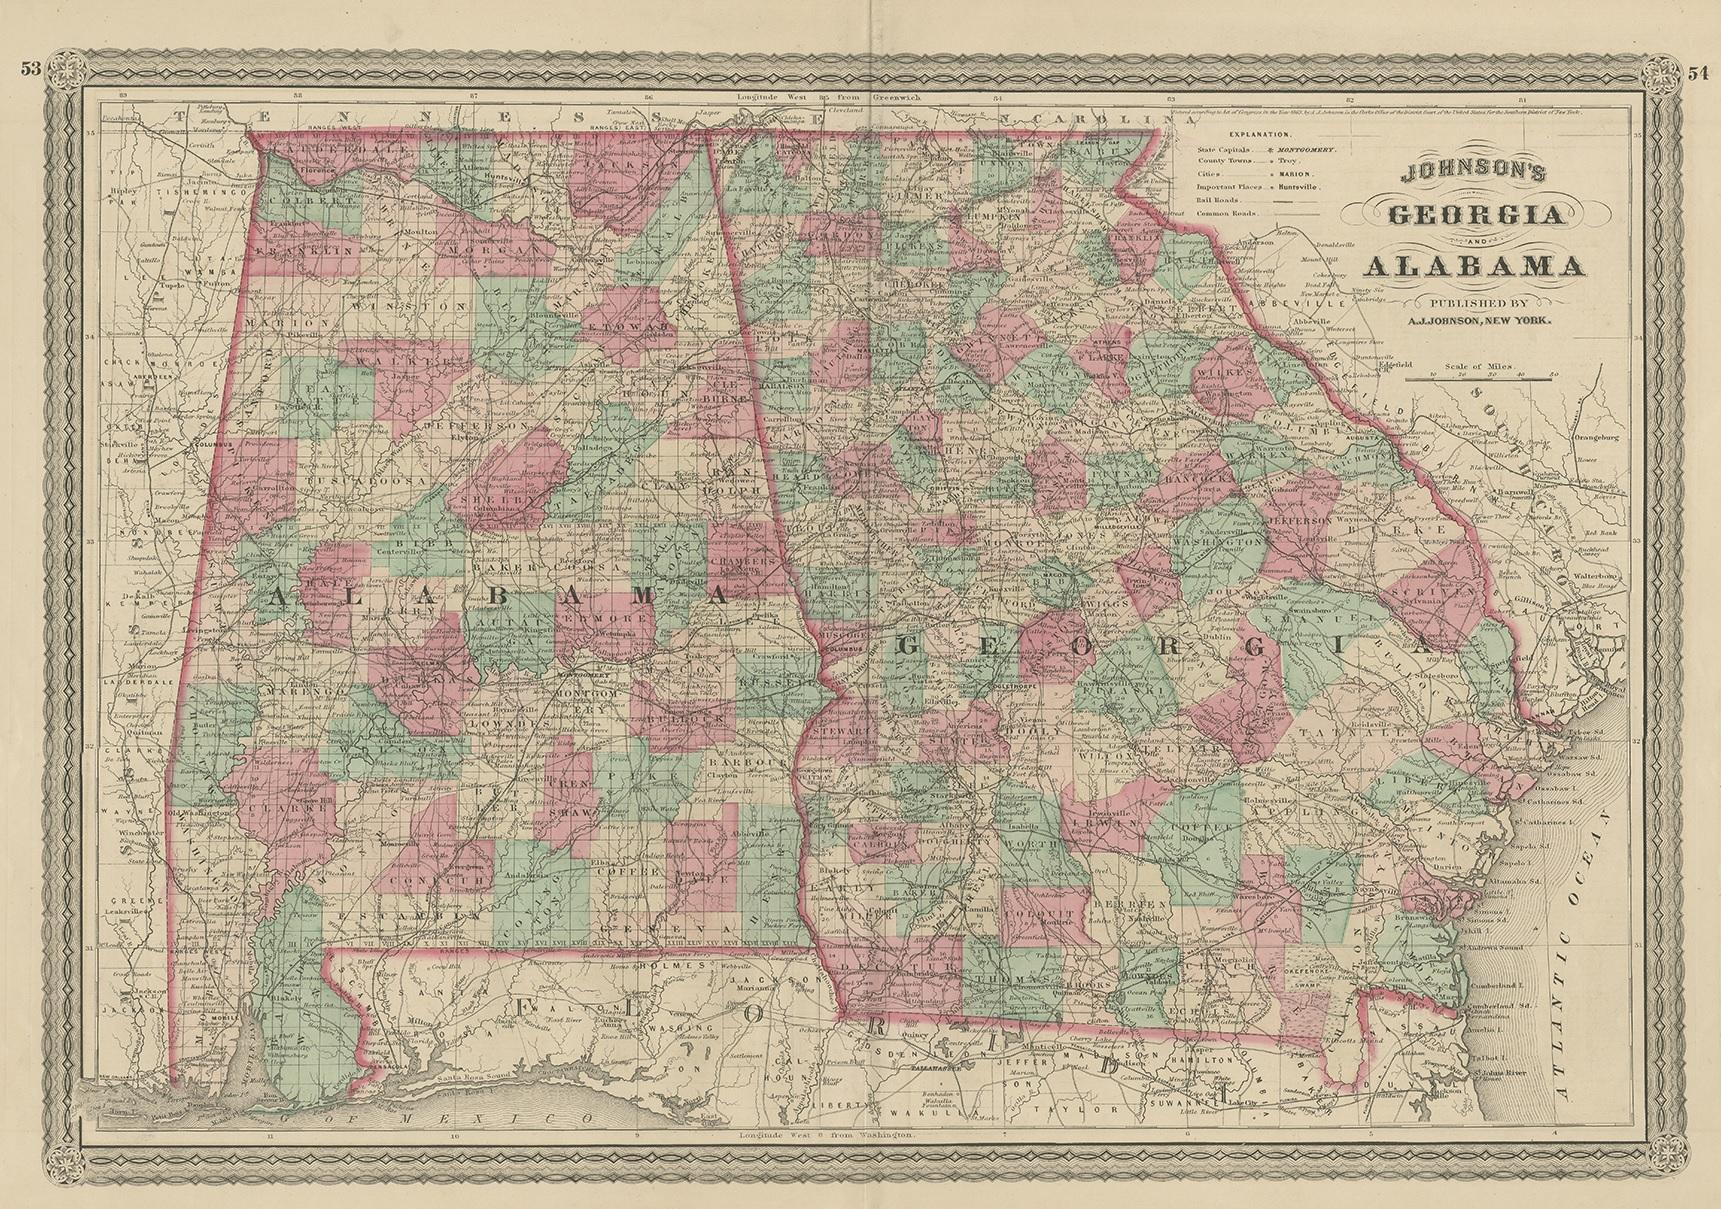 Antike Karte mit dem Titel 'Johnsons Georgia und Alabama'. Original-Karte von Georgia und Alabama. Diese Karte stammt aus 